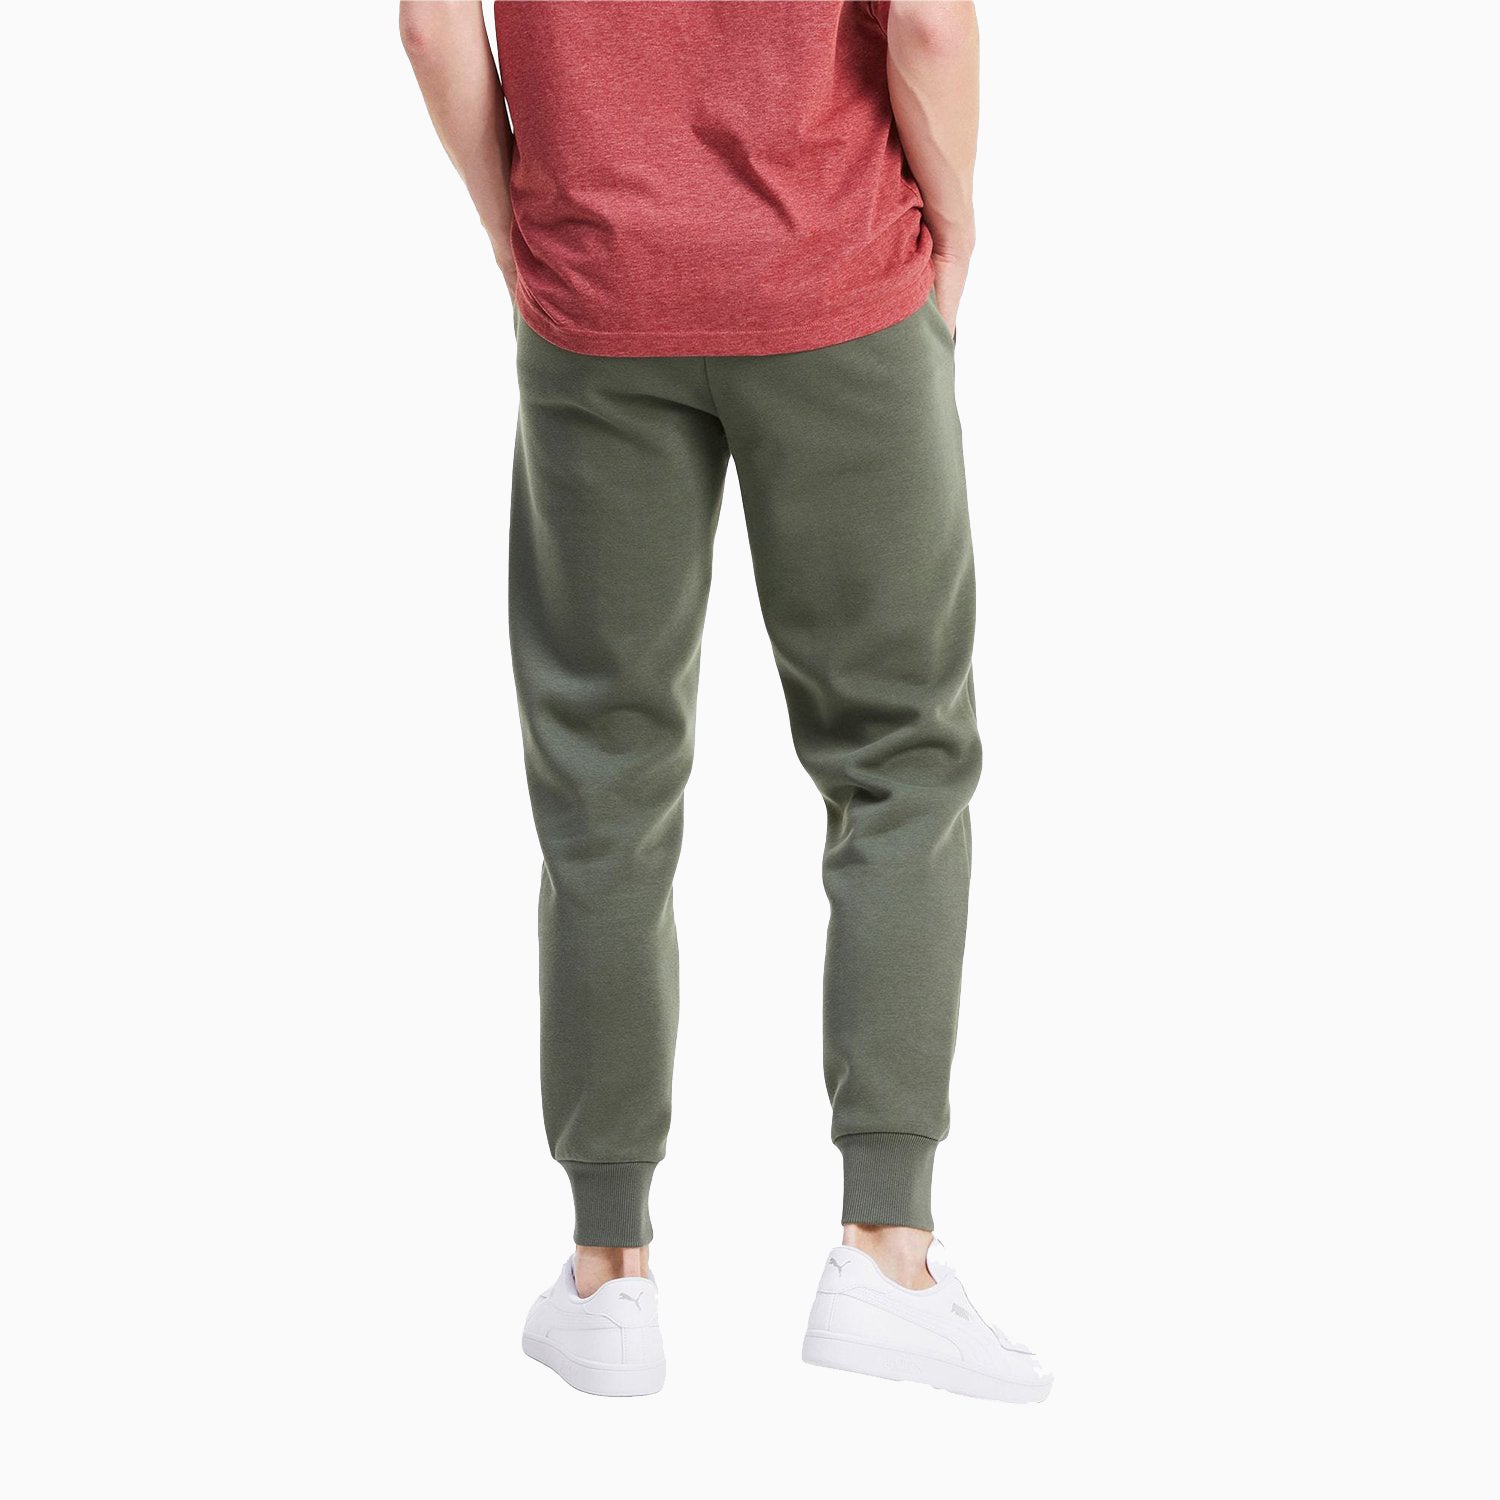 Puma Men's Essentials Logo Sweatpants - Color: Thyme - Tops and Bottoms USA -